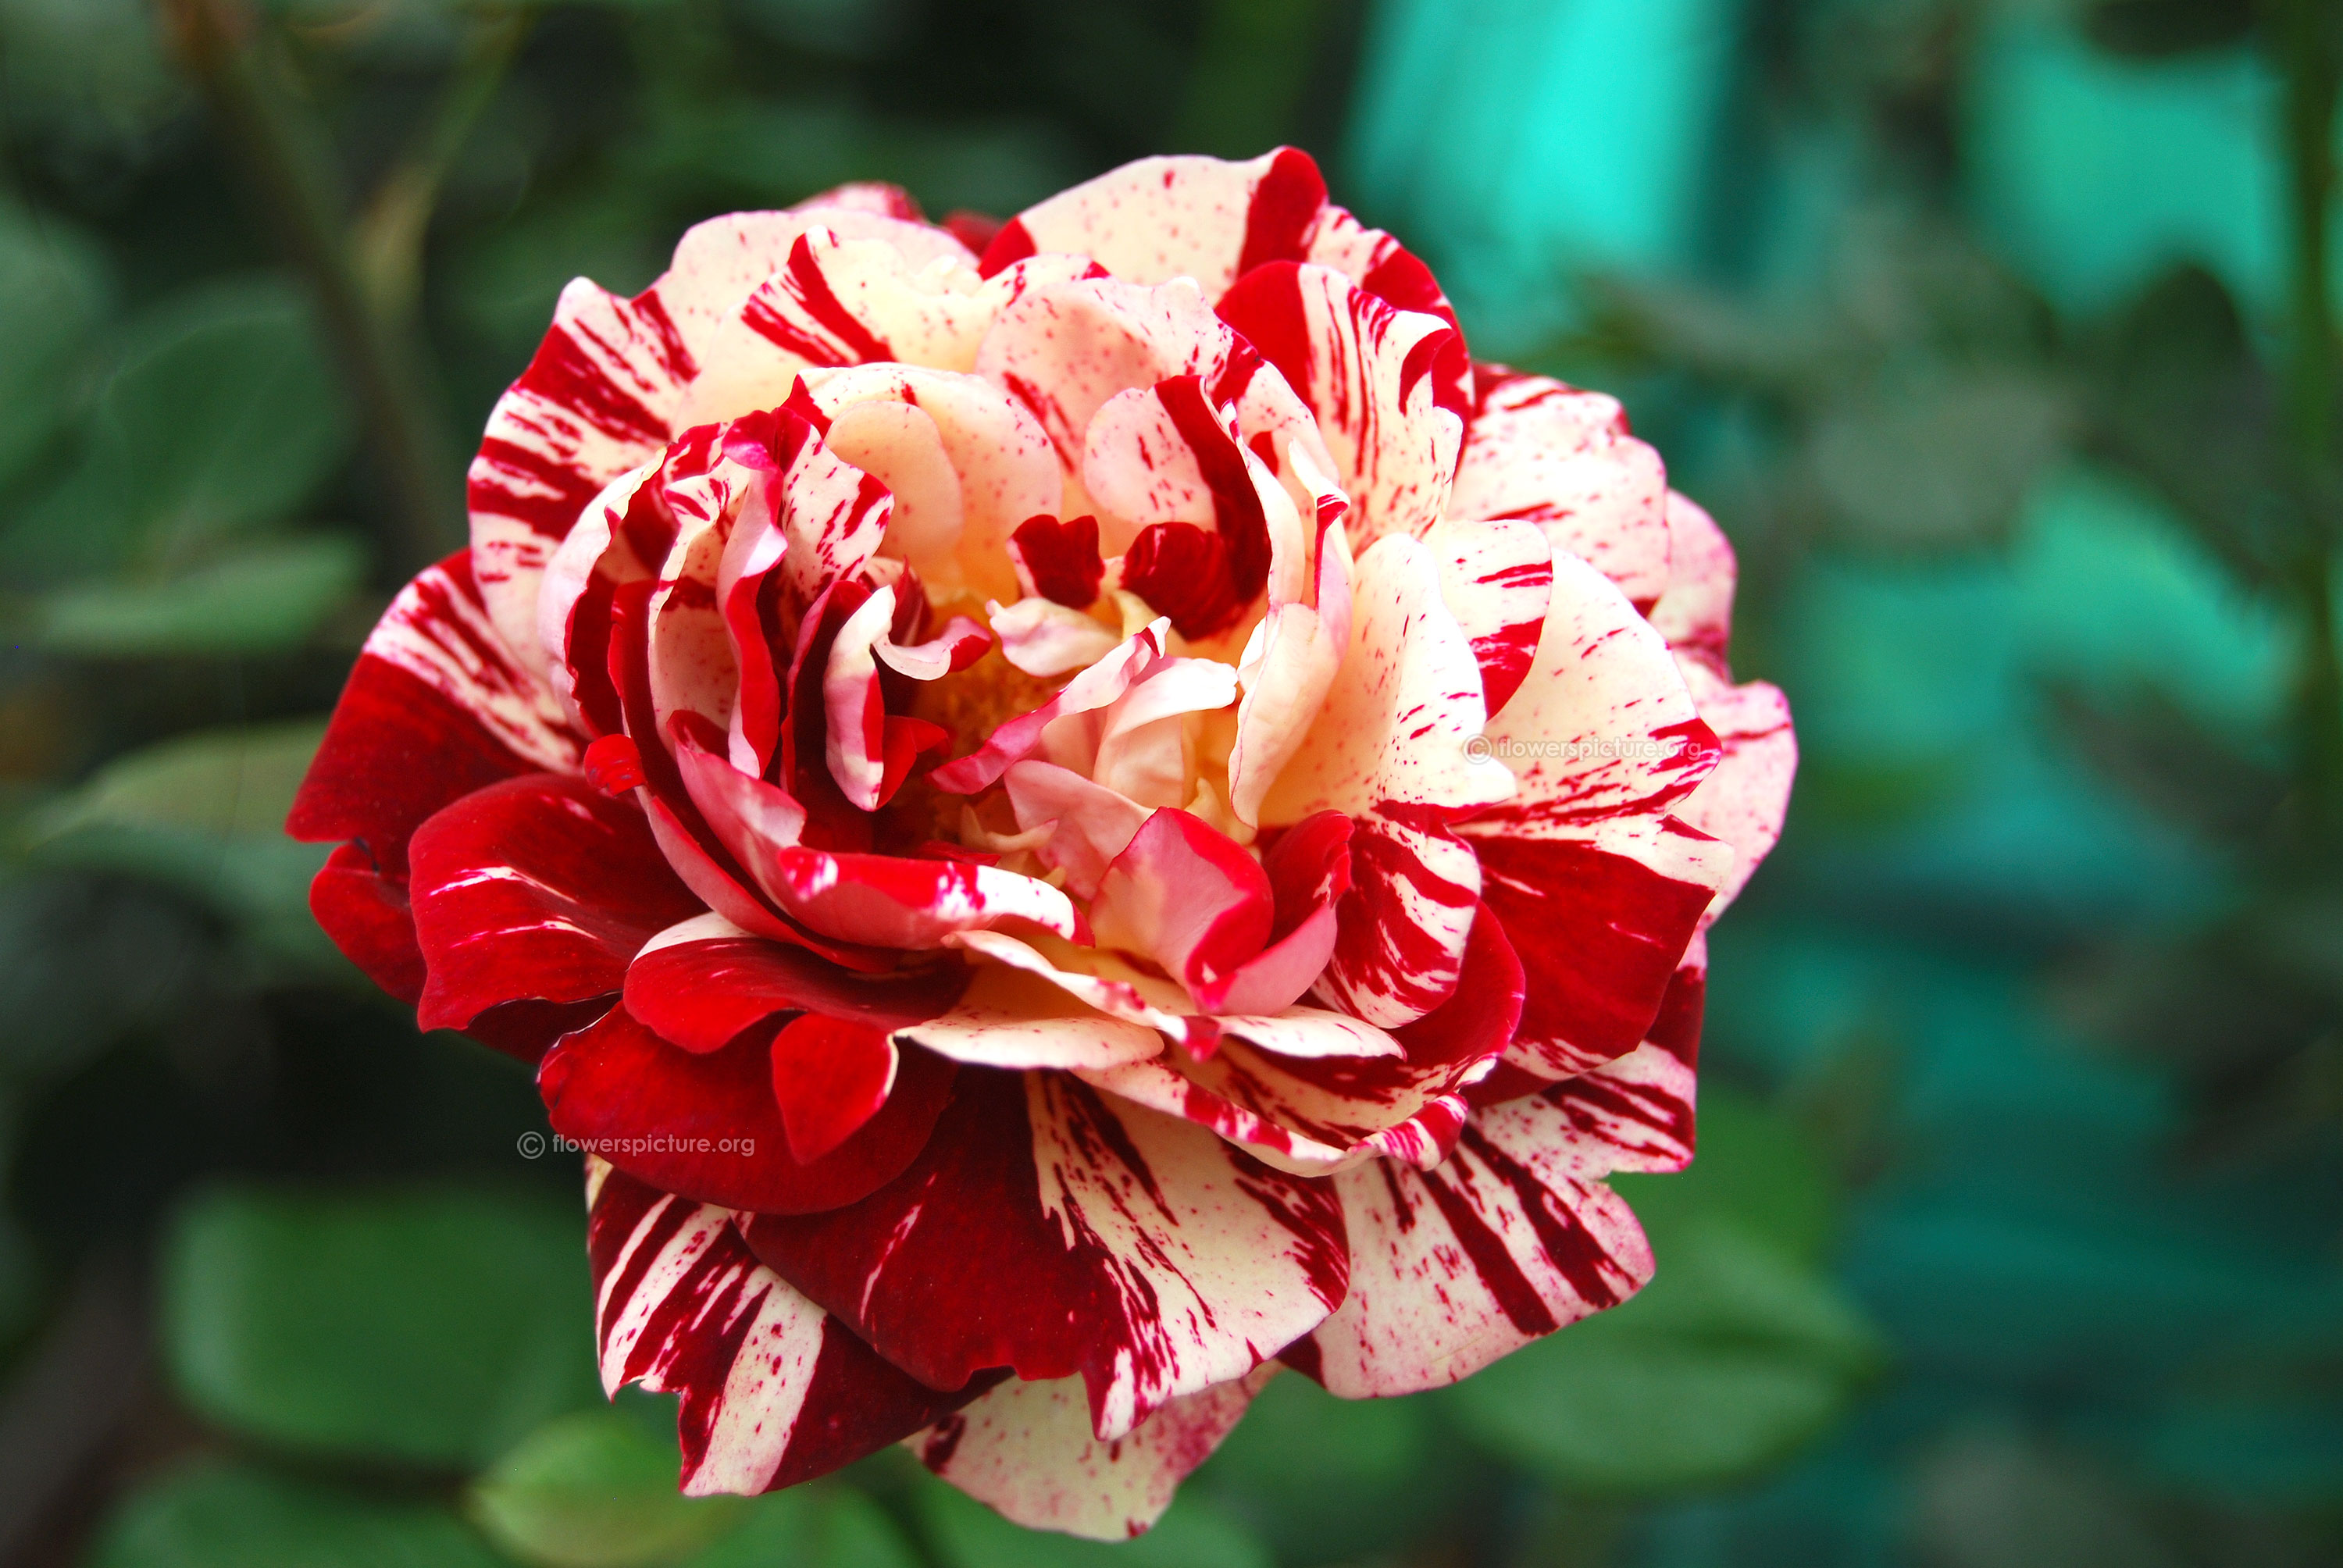 rose flower wallpaper hd free download,flower,flowering plant,petal,red,plant